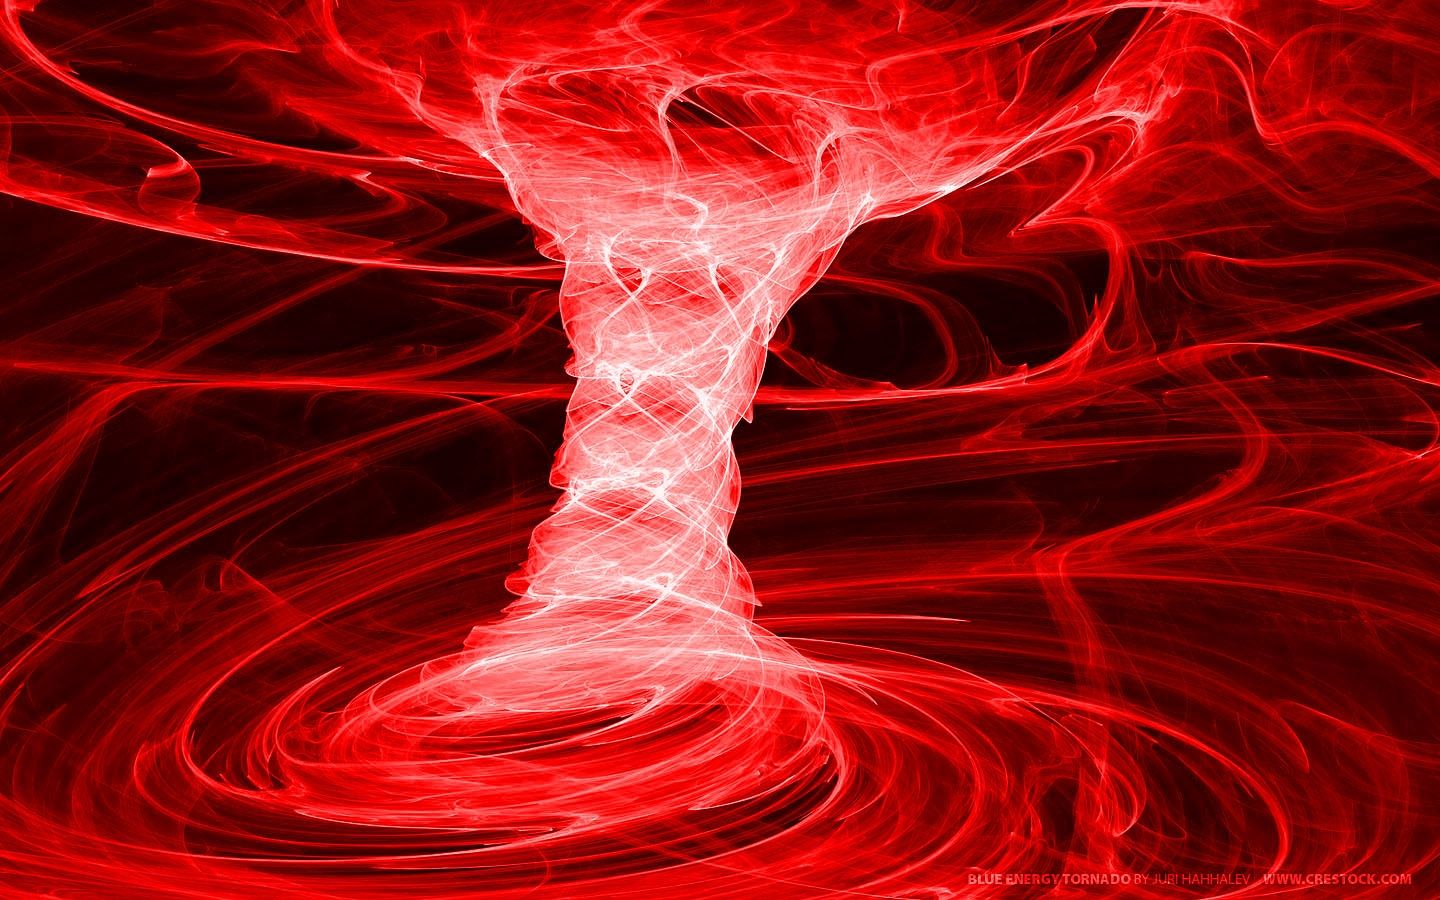 Free download 14 Tornado And Lightning Wallpapers Red Tornado